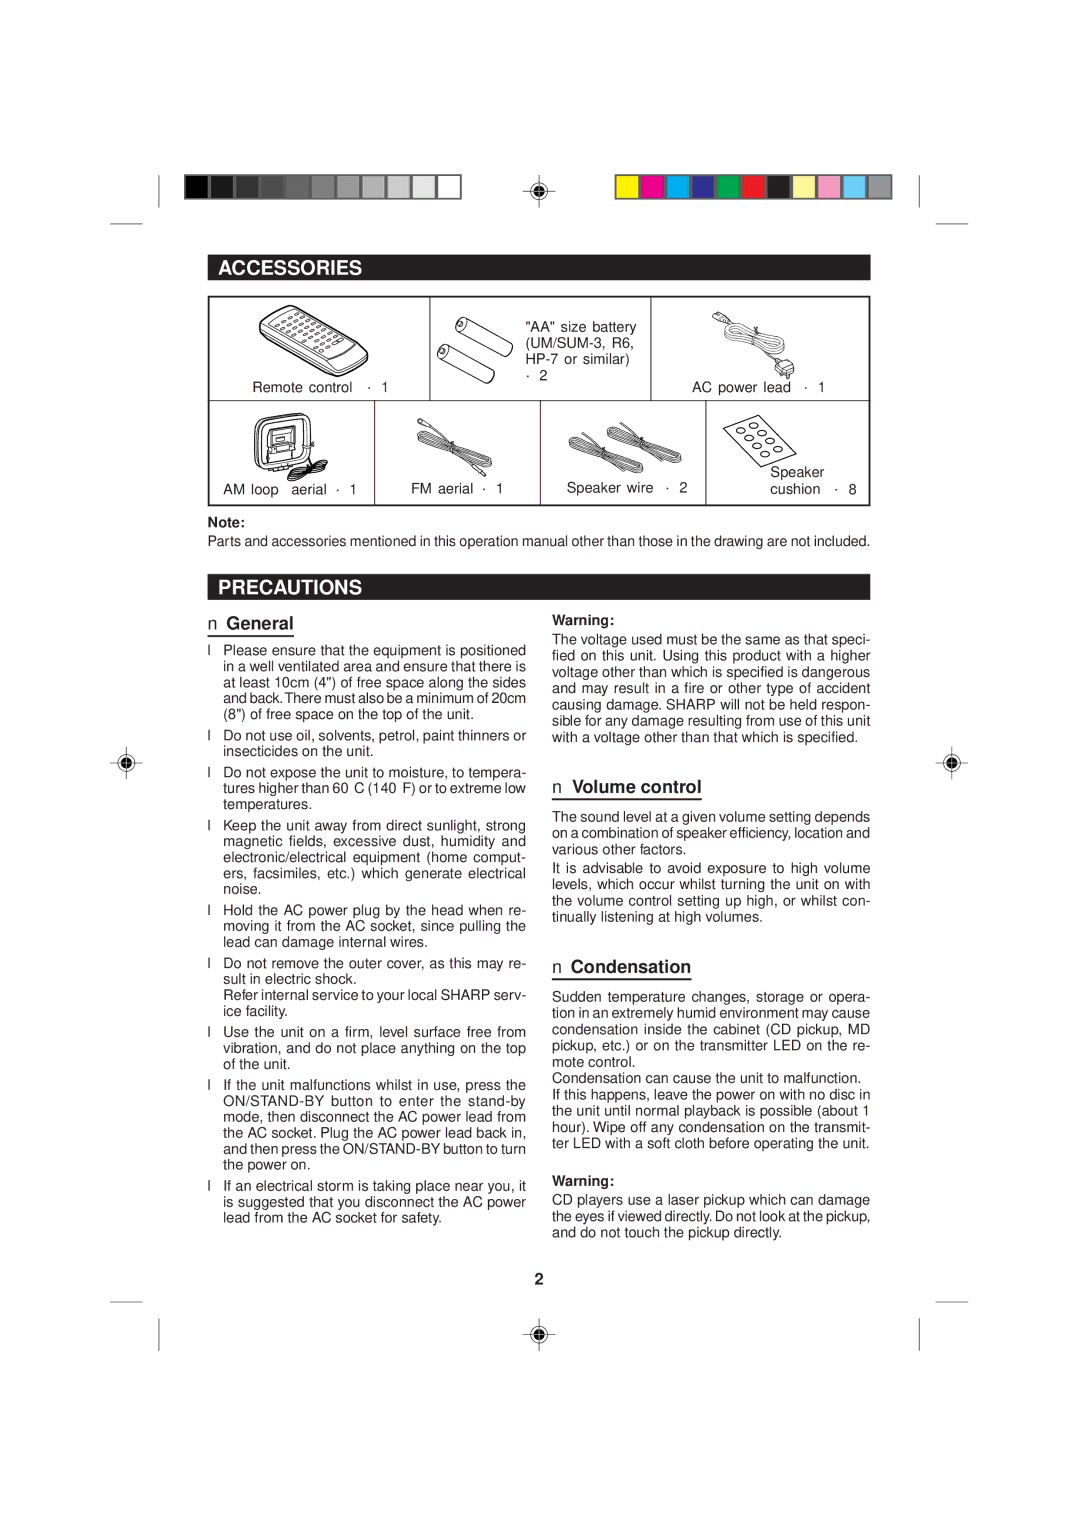 Sharp MD-M2H operation manual Accessories, Precautions, General, Volume control, Condensation 